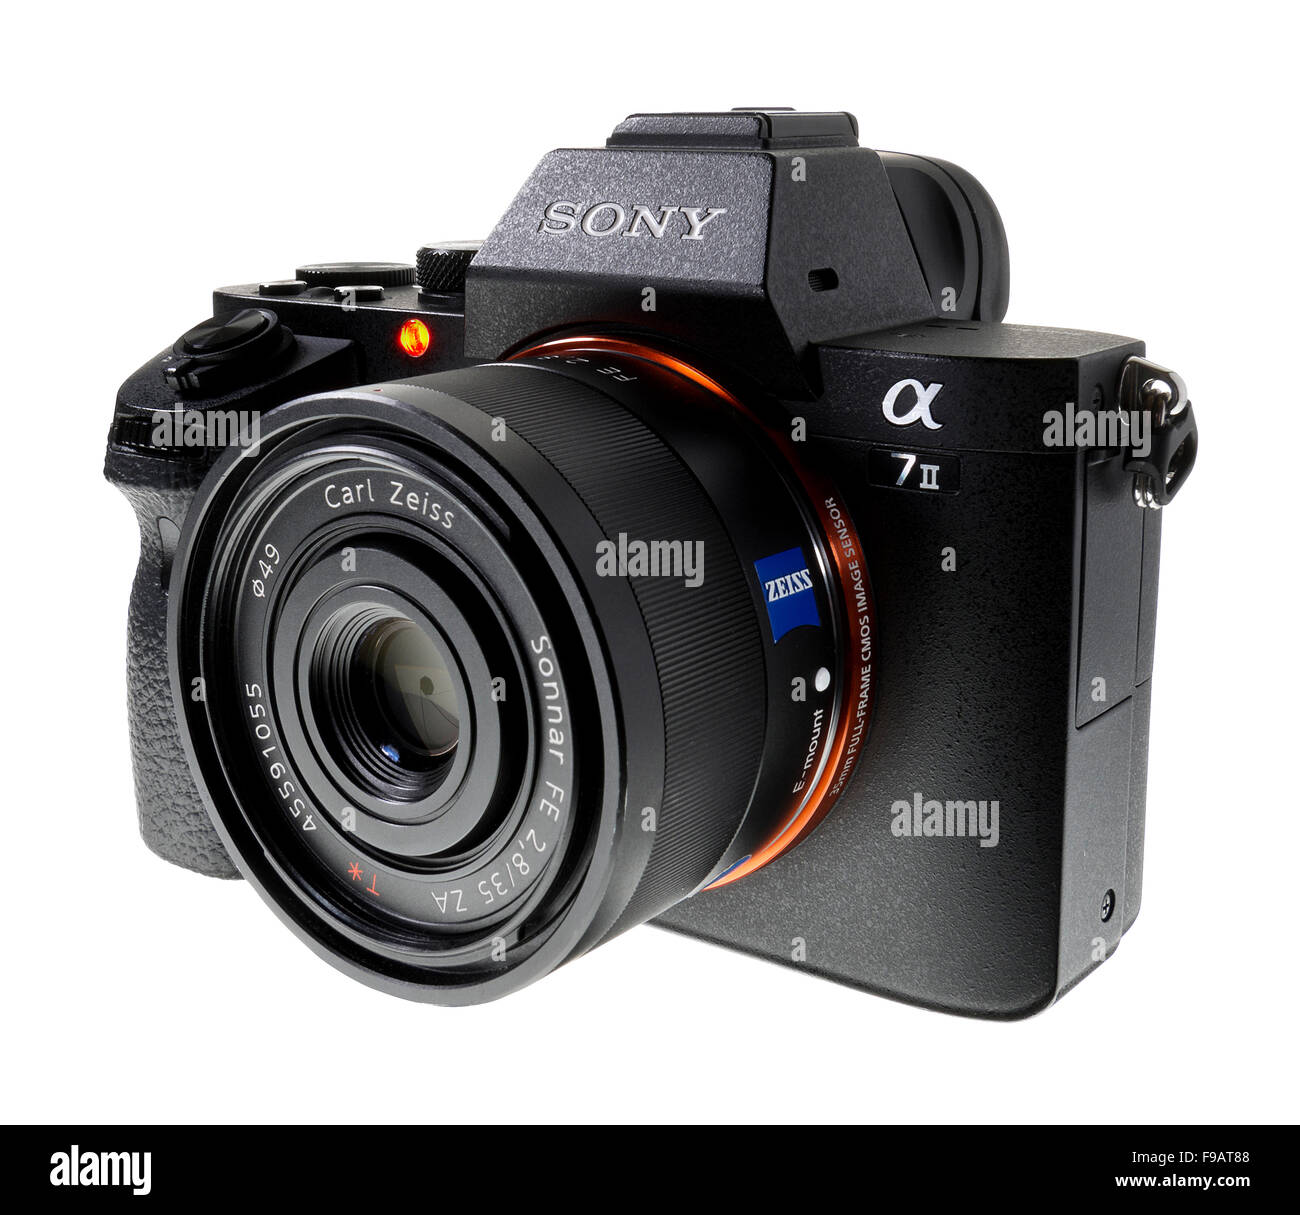 Sony zeiss fotografías e imágenes de alta resolución - Alamy